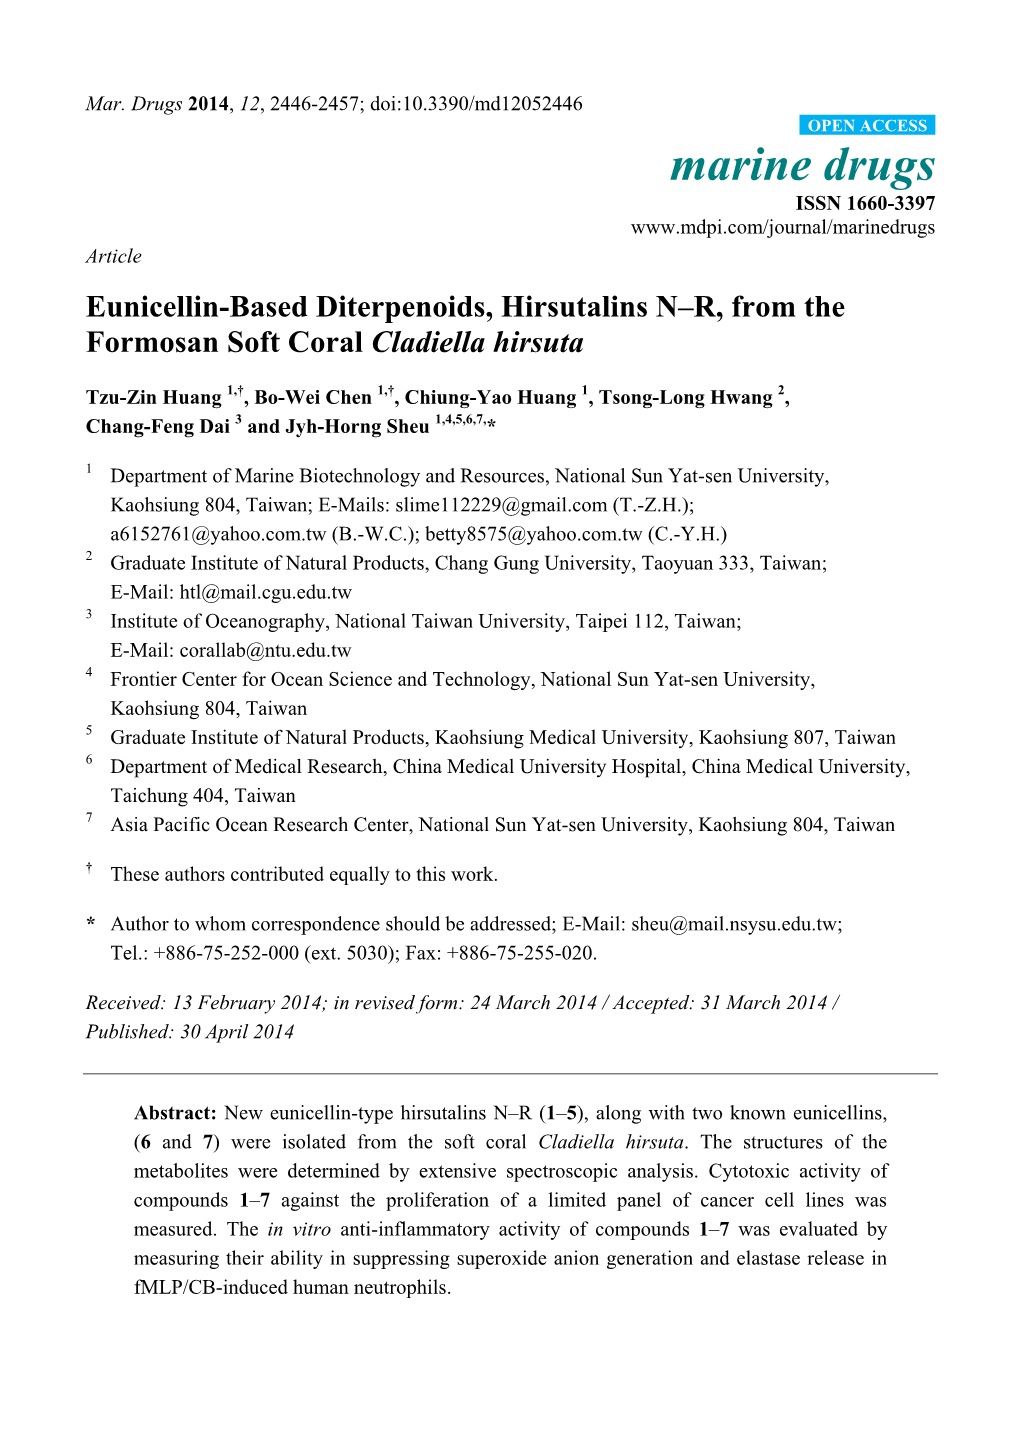 Eunicellin-Based Diterpenoids, Hirsutalins N–R, from the Formosan Soft Coral Cladiella Hirsuta